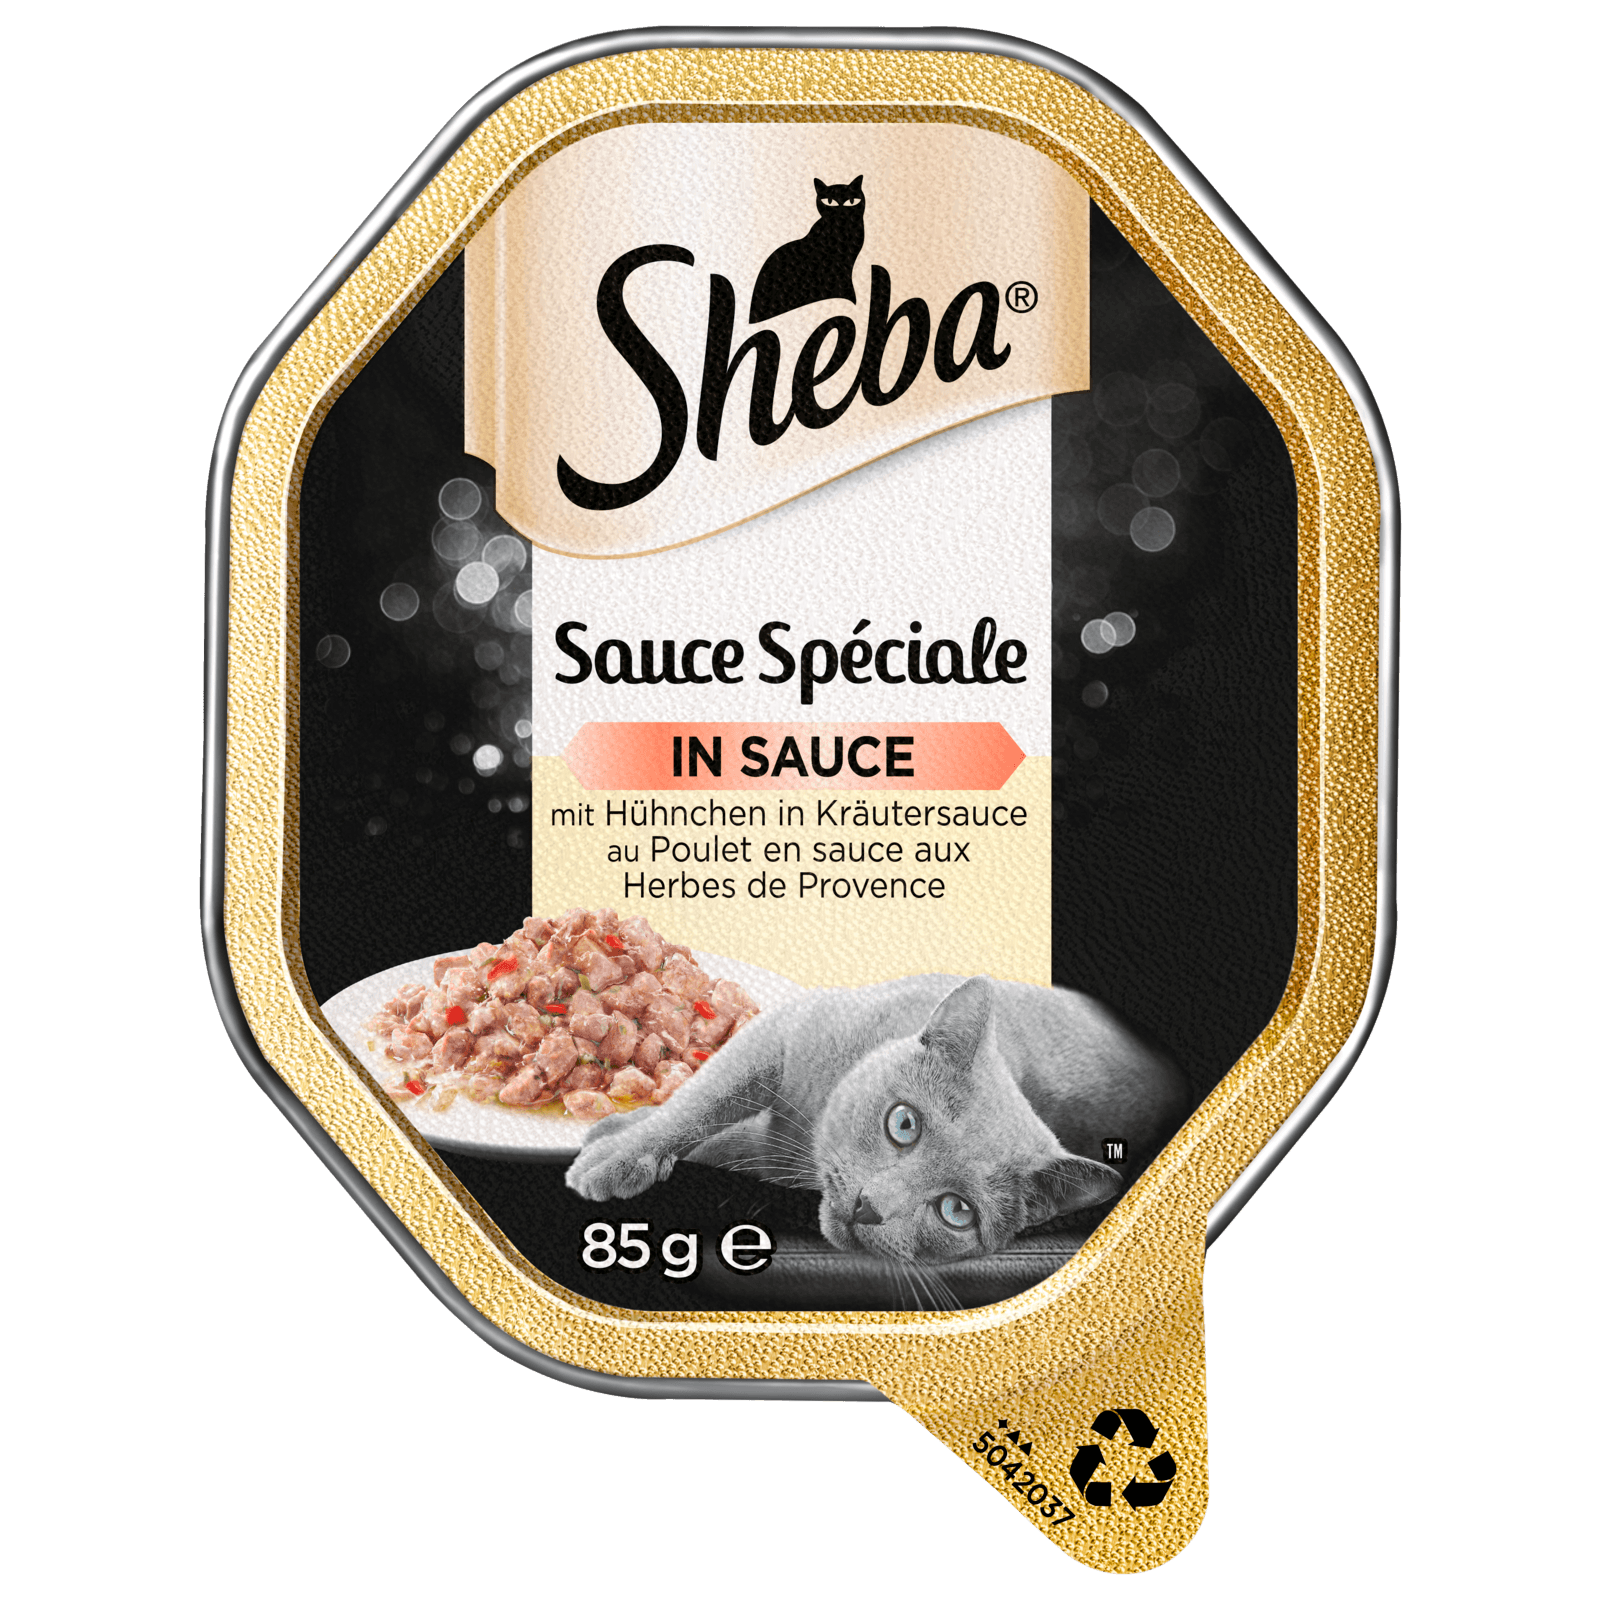 Sheba Sauce Spéciale mit Hühnchen in Kräutersauce 85g